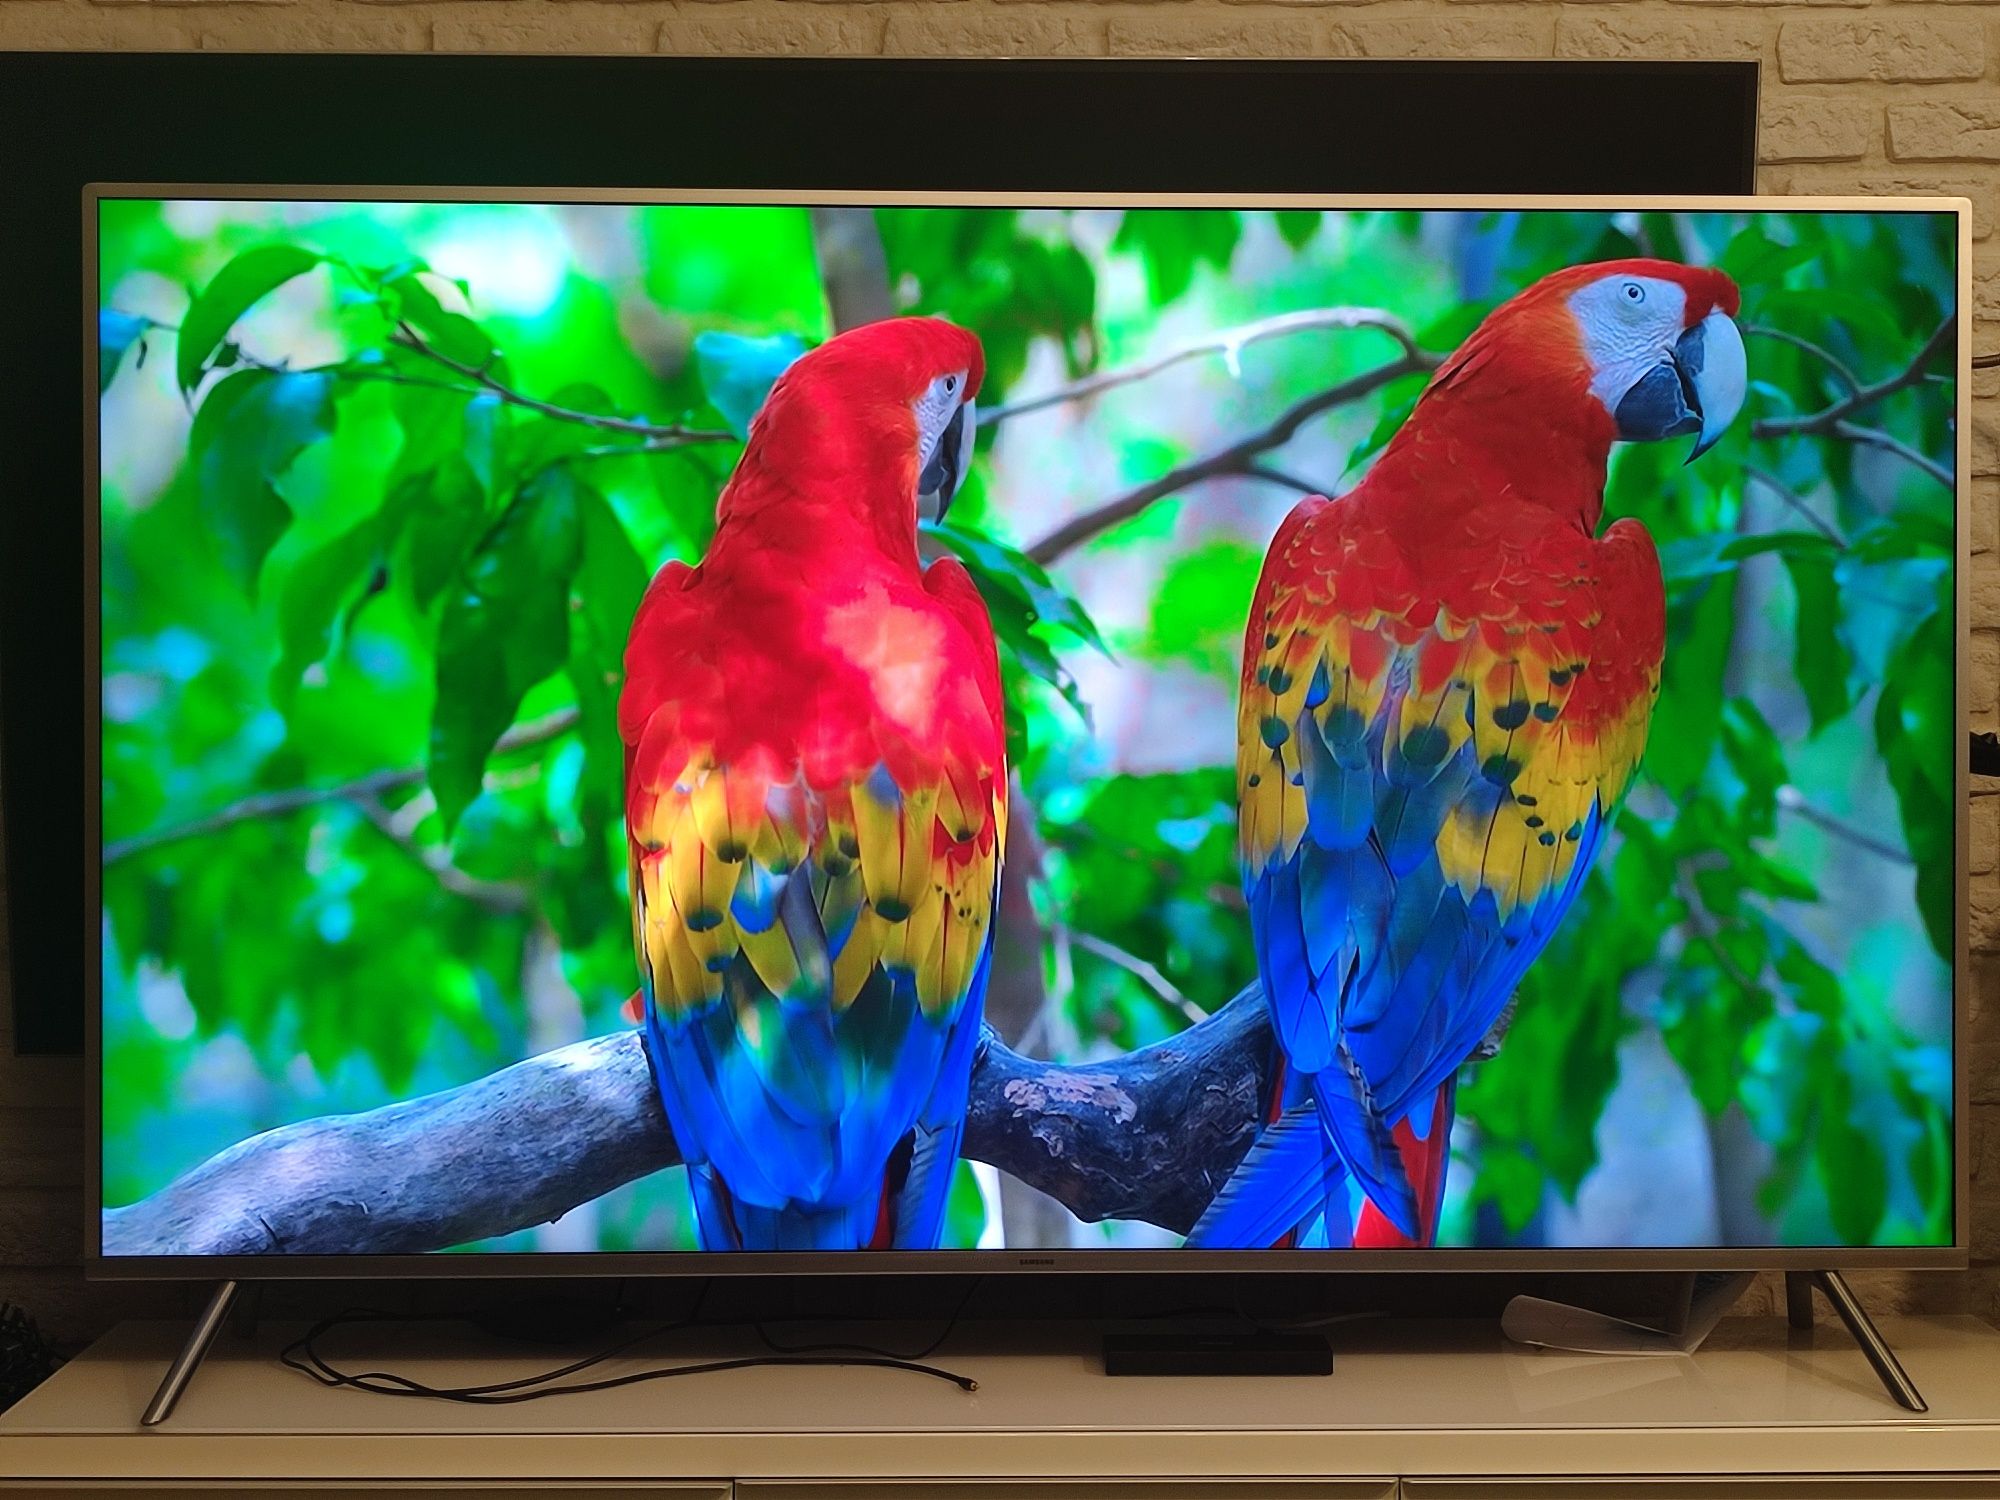 Samsung 49 4K Smart TV DVB-T2 Netflix YouTube